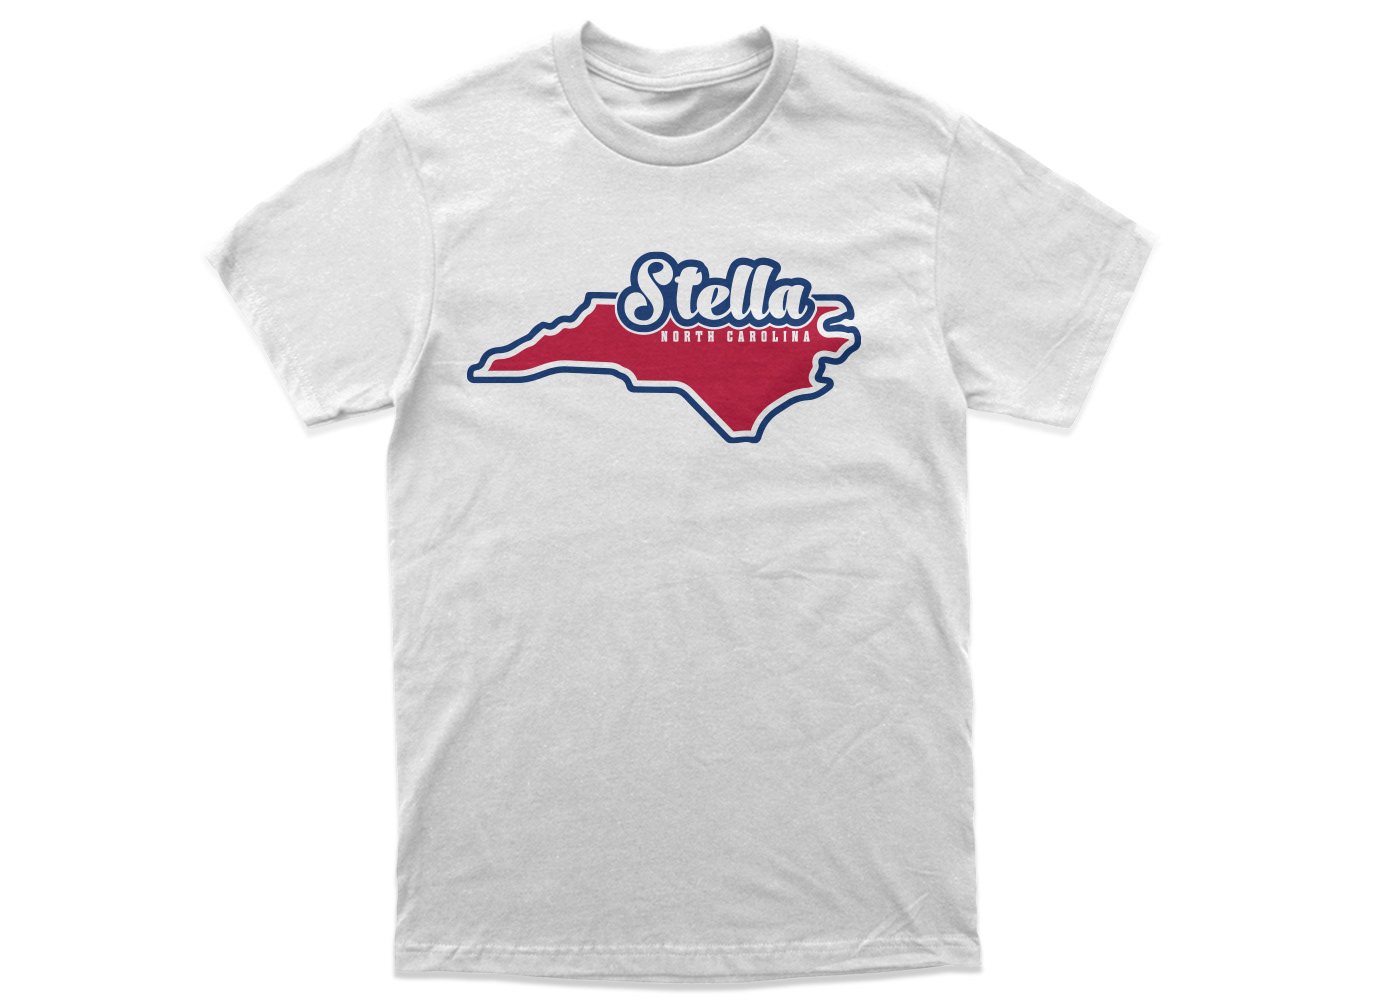 Stella T-shirt Design :: Behance